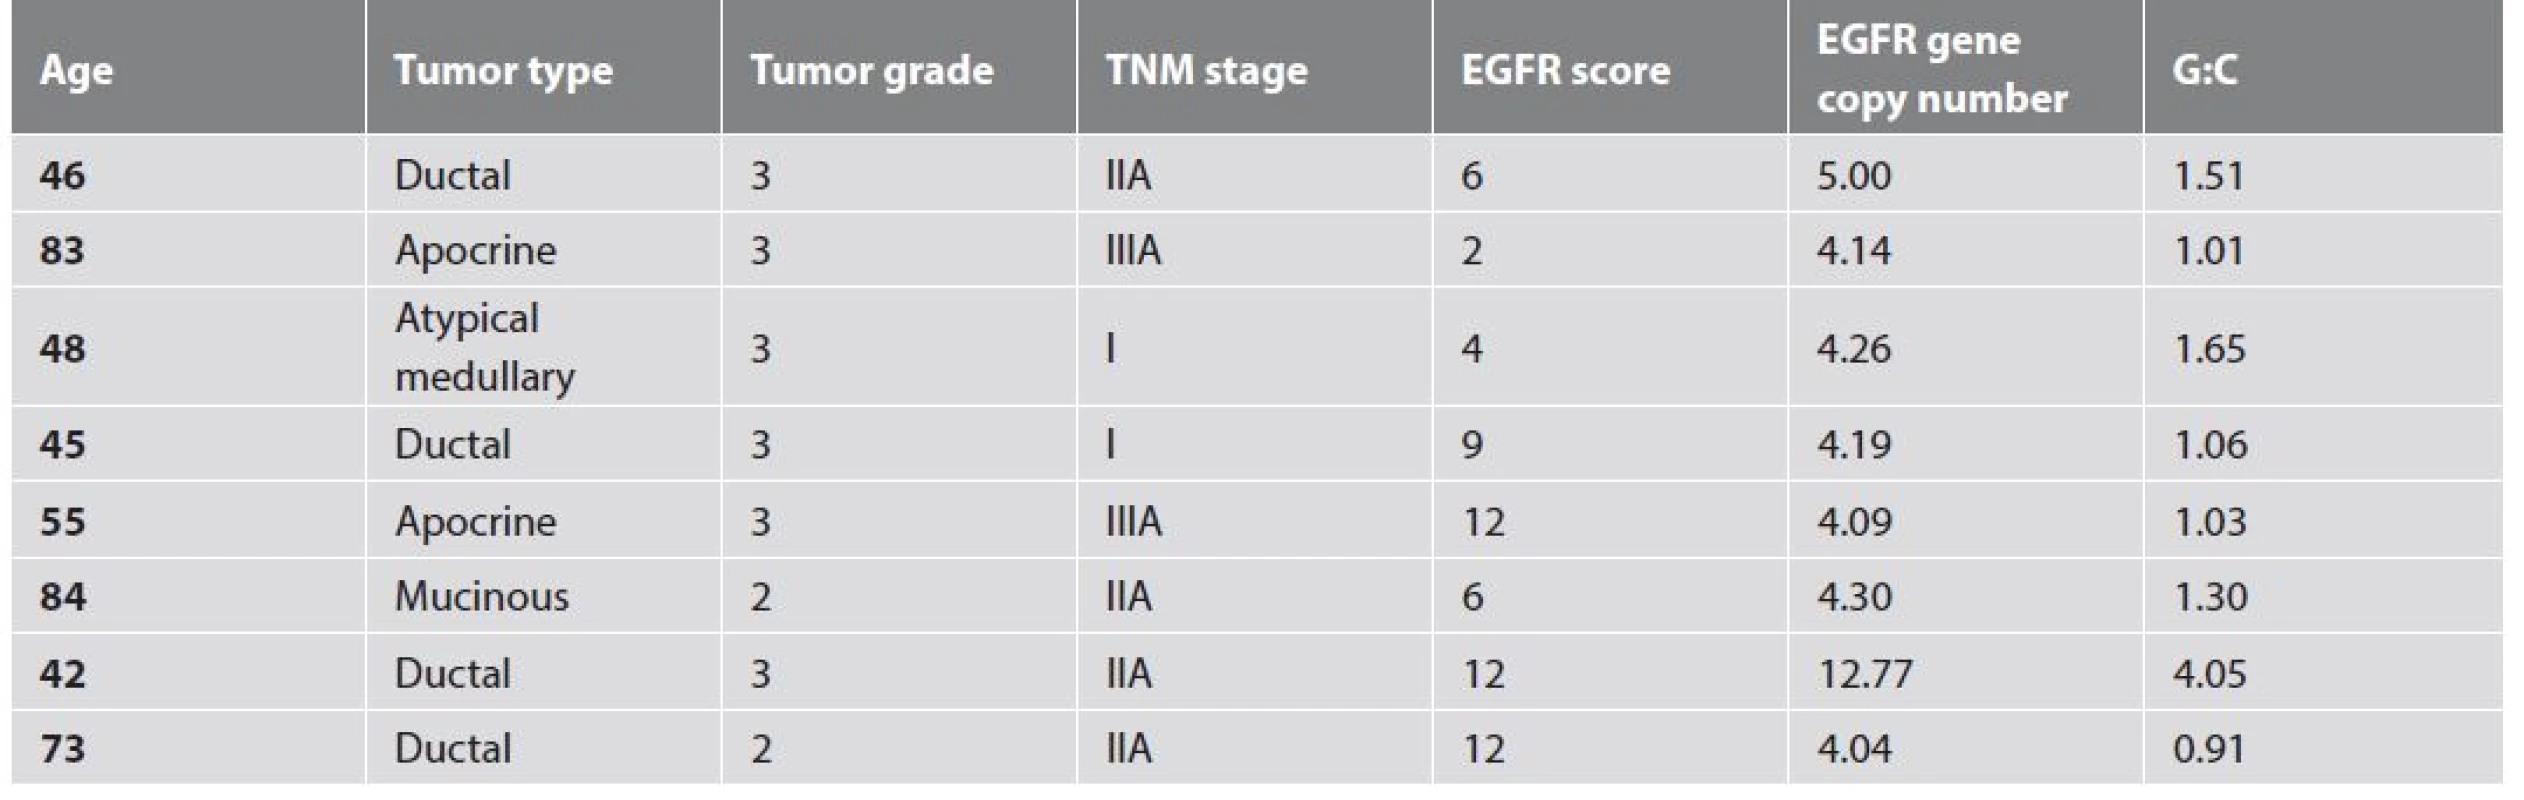 Clinico-pathologic characteristics of tumors with ≥4 EGFR gene copies per cell.